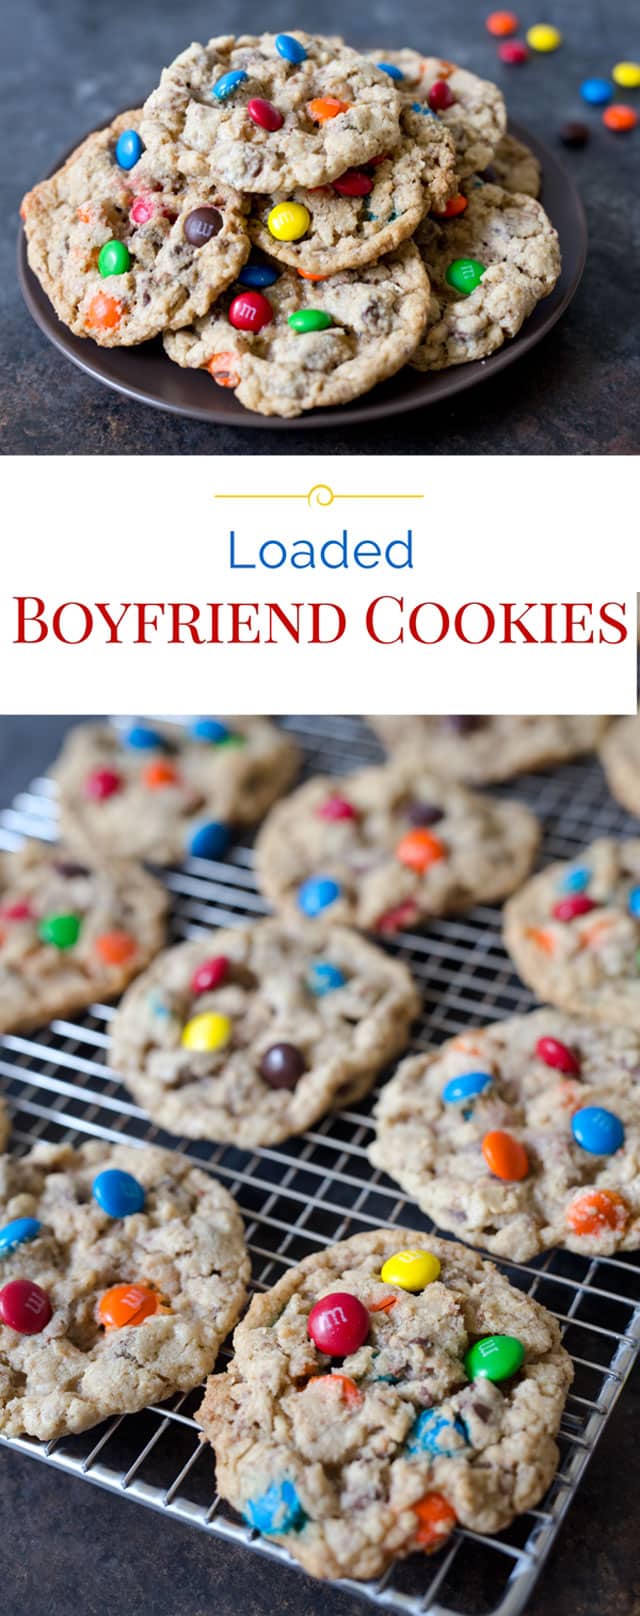 Boyfriend-Cookies-Collage-2-Barbara-Bakes